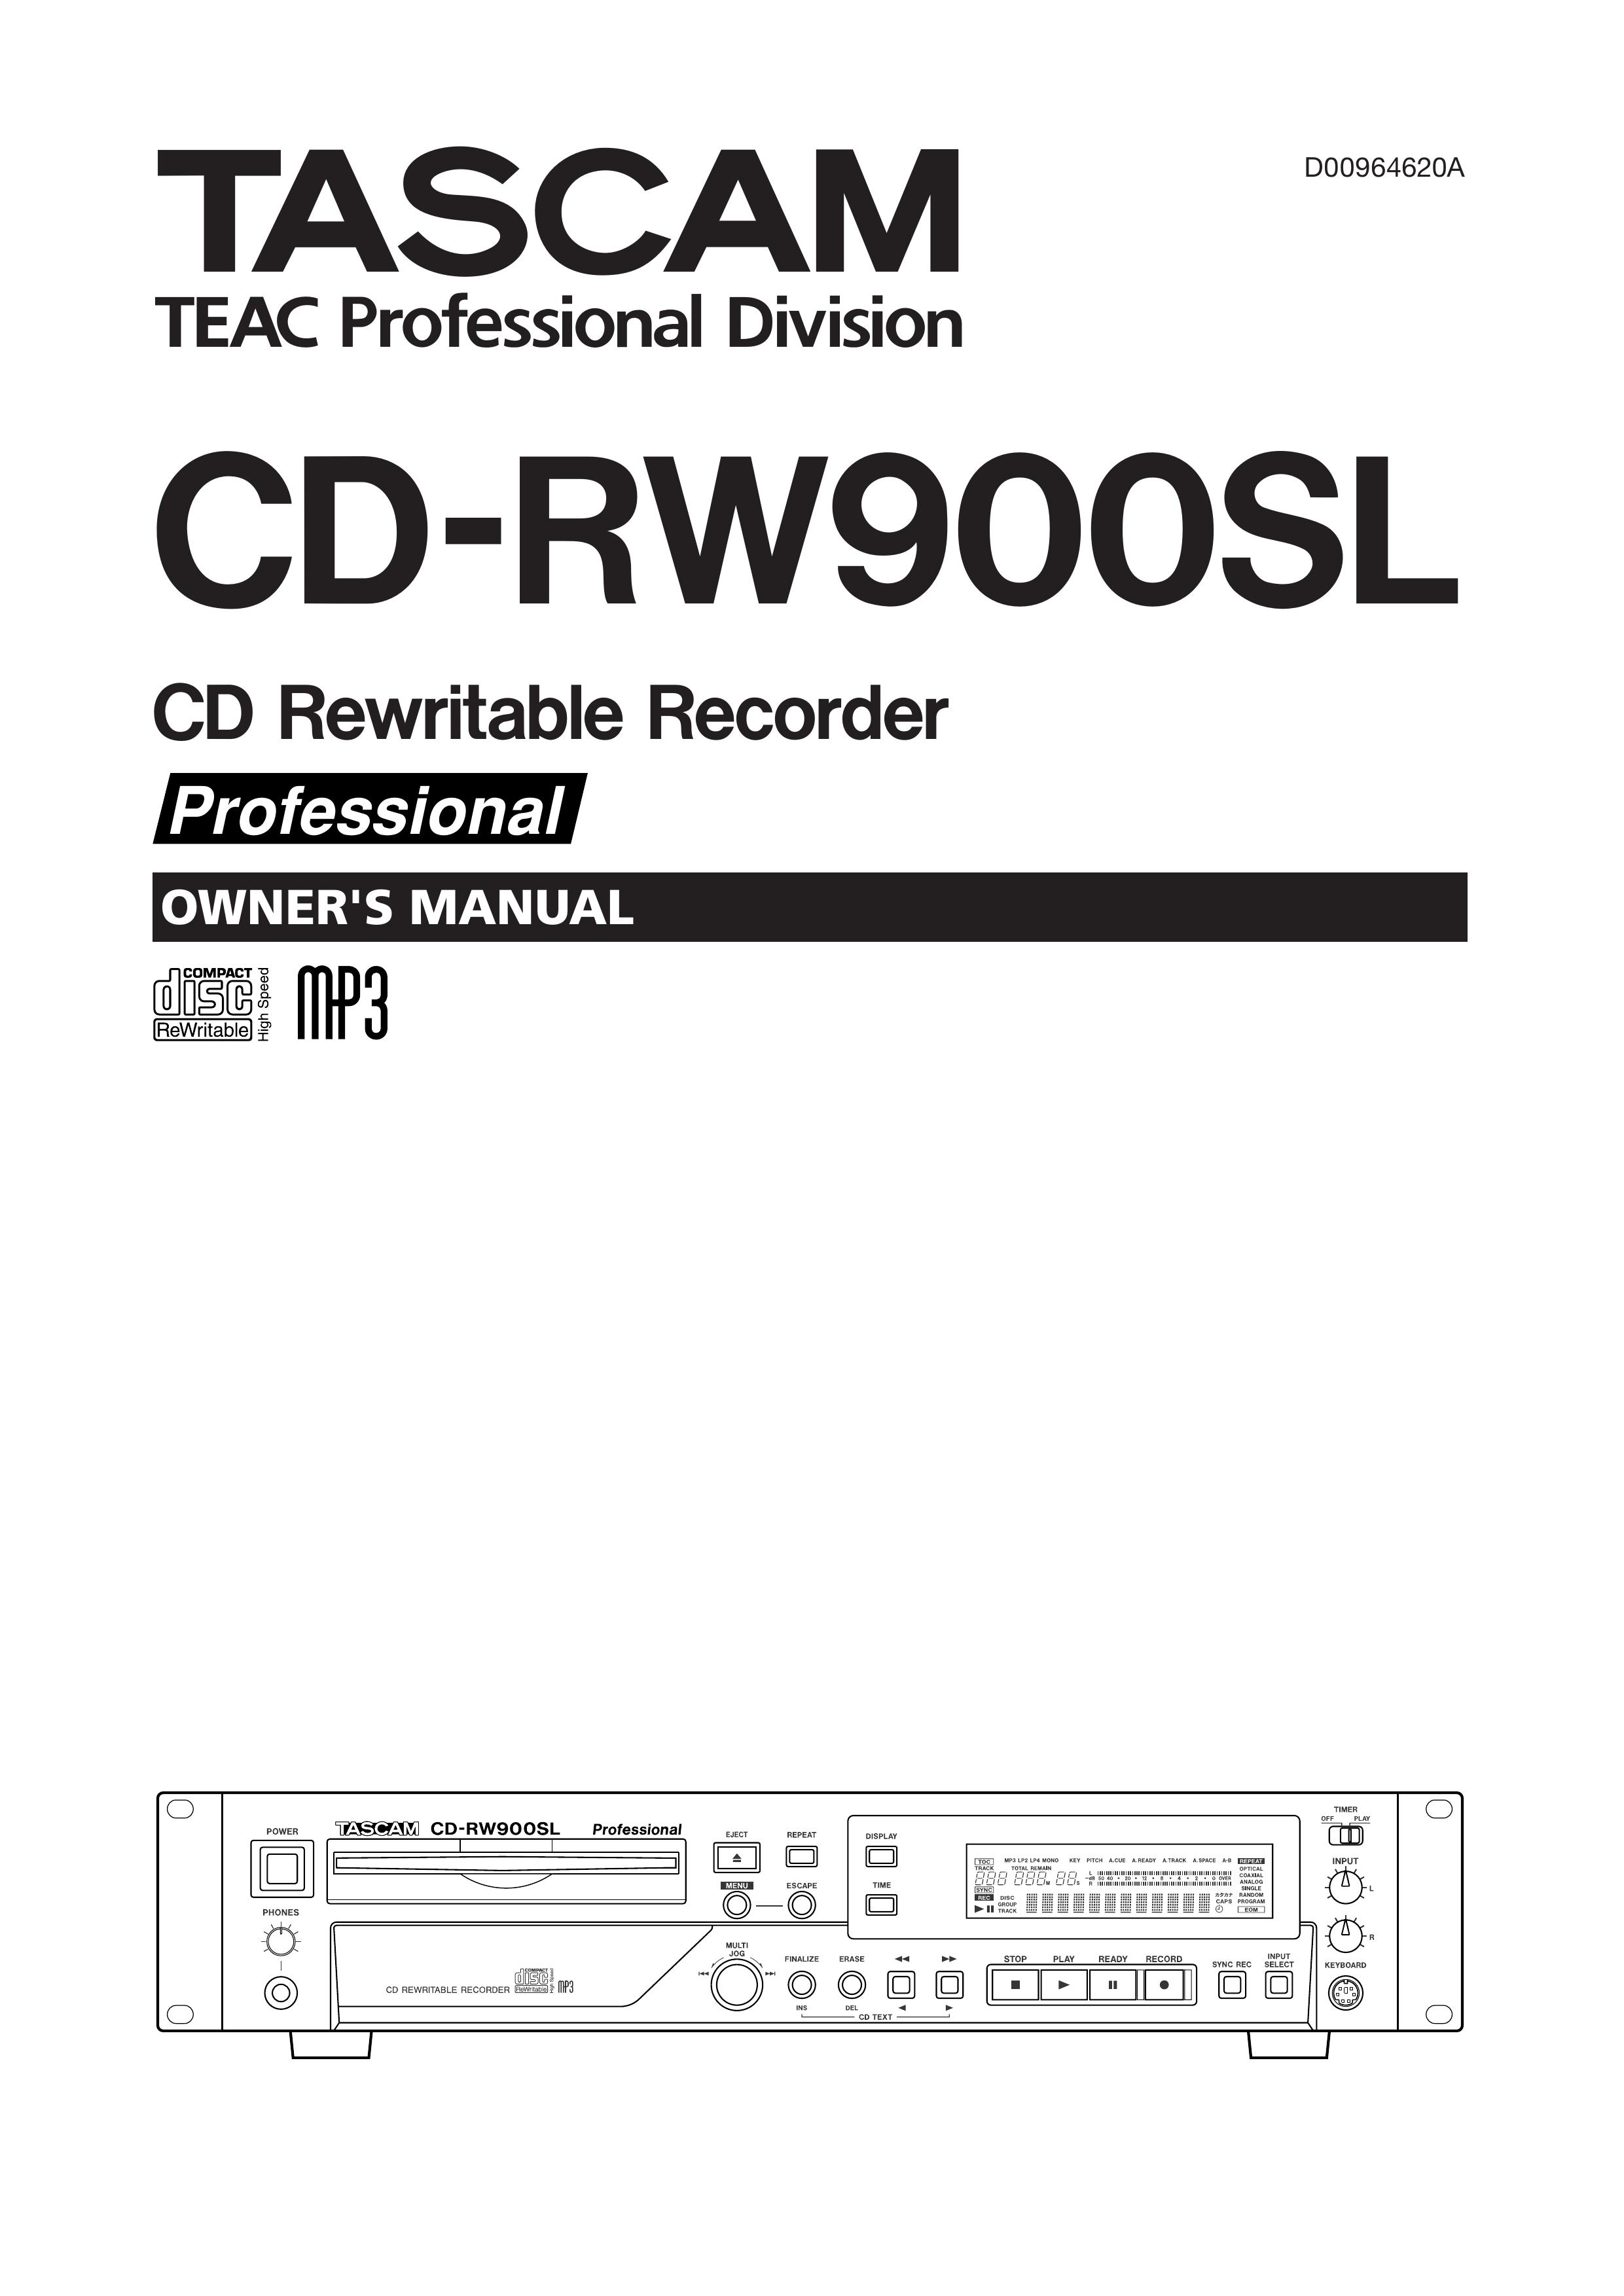 Tascam CD-RW900SL Recording Equipment User Manual